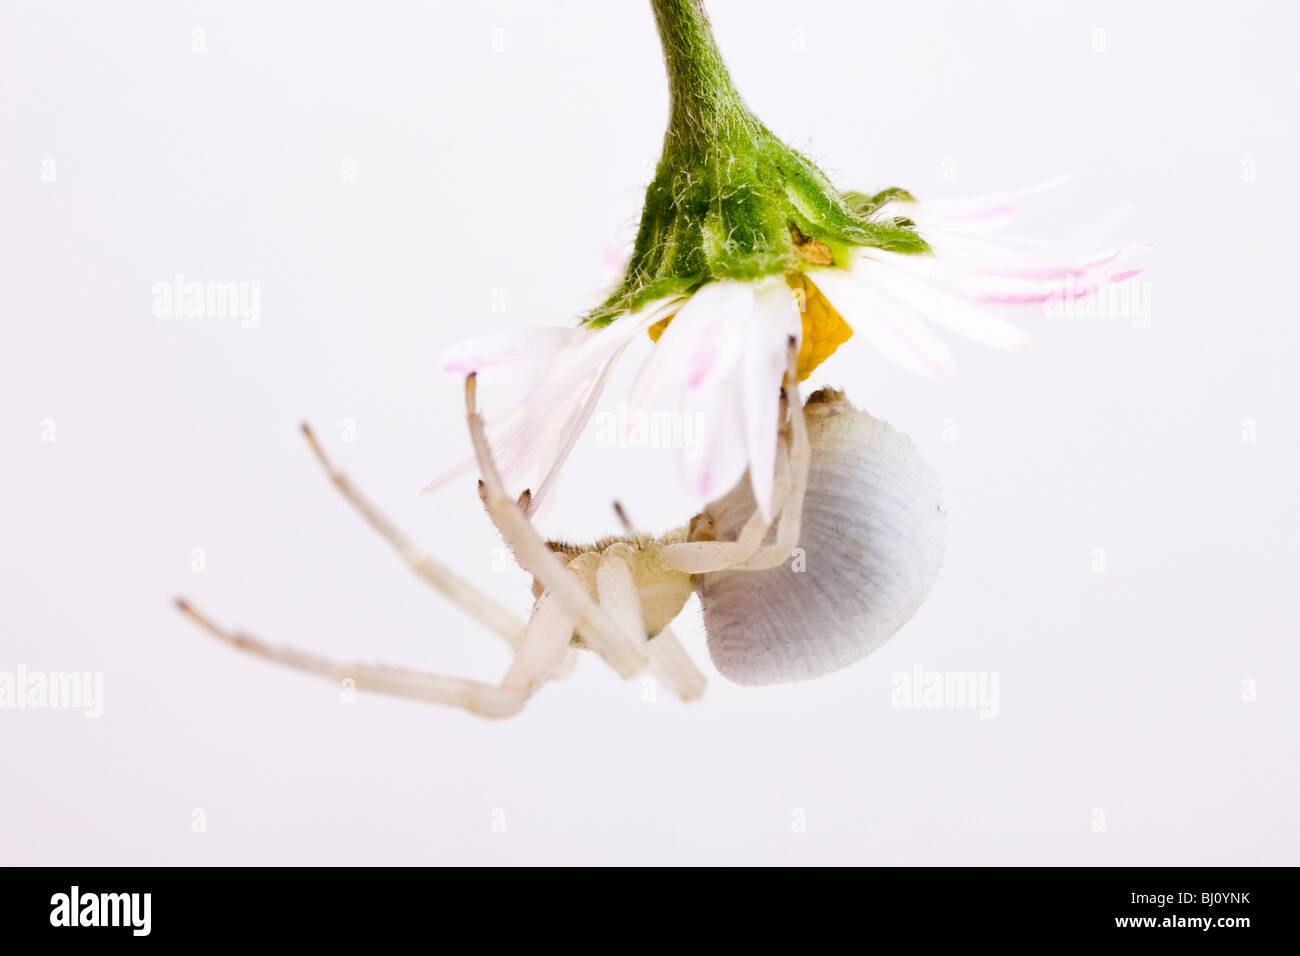 goldenrod crab spider (Misumenta vatia) Stock Photo